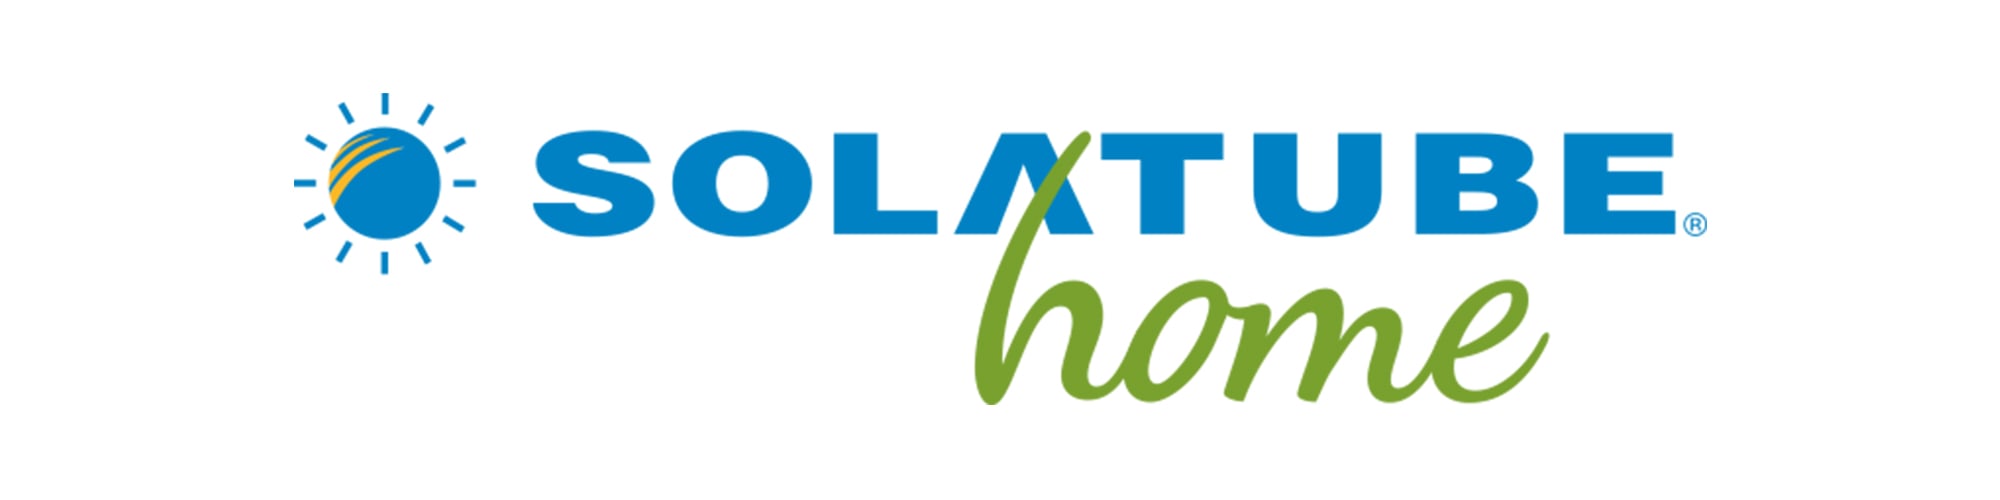 Solatube Home Logo